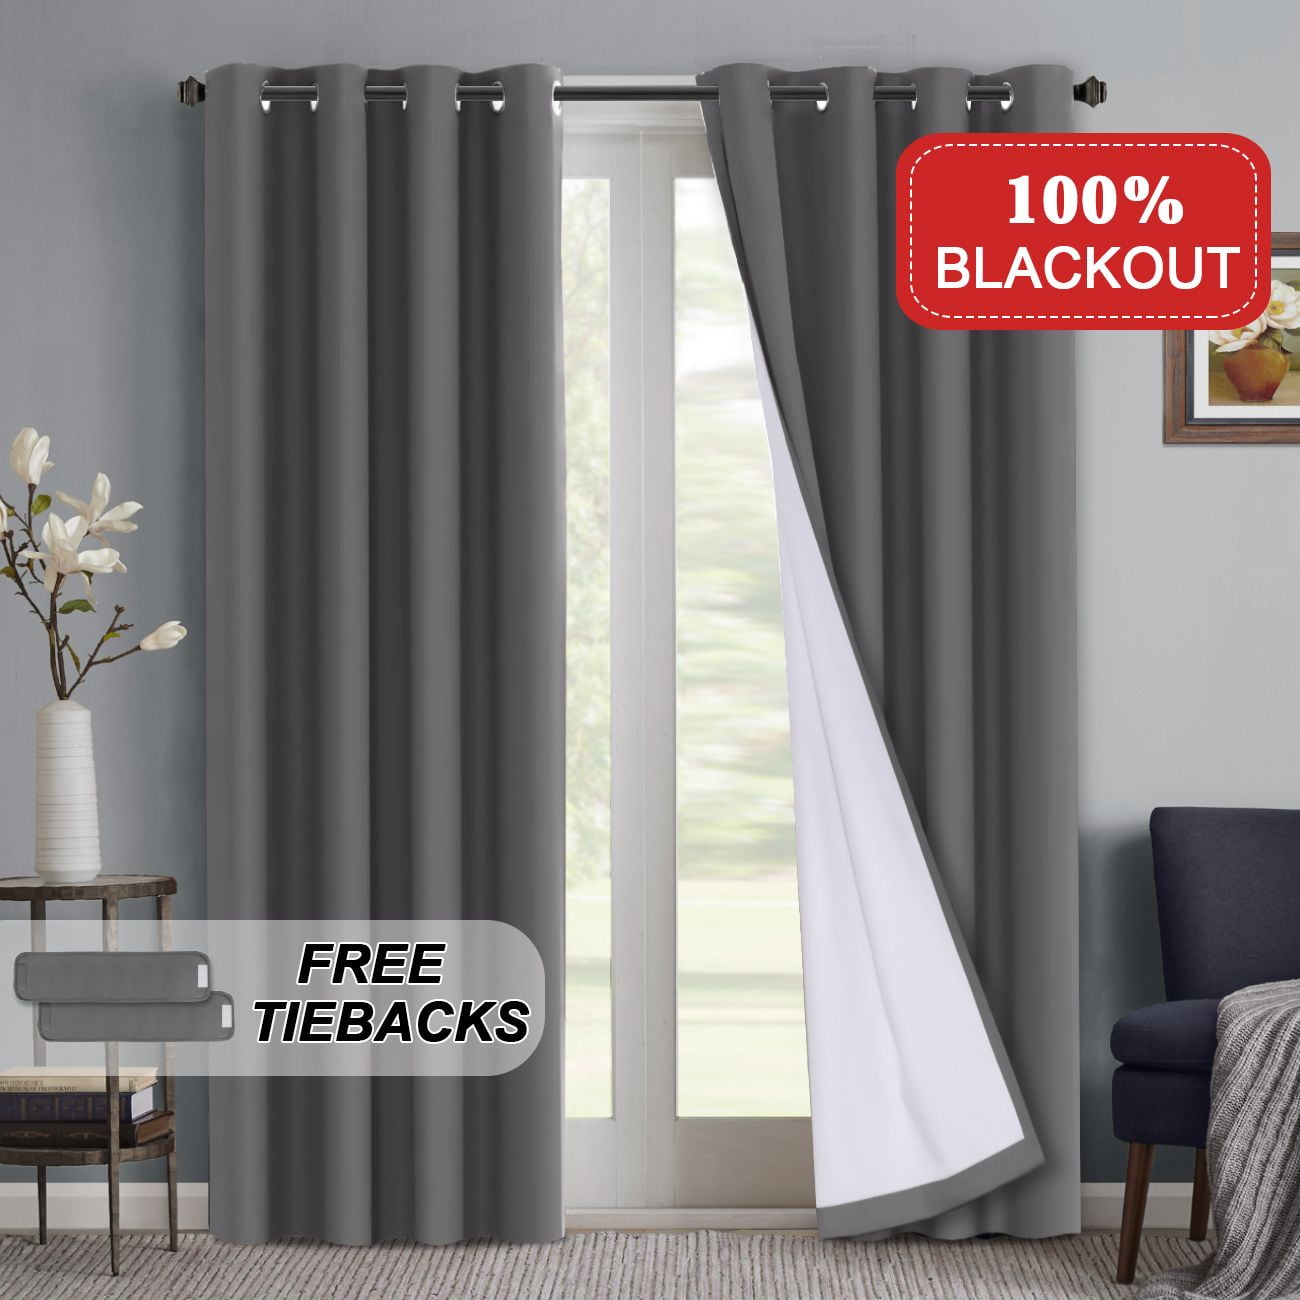 Details about   H.VERSAILTEX Blackout Patio Curtain 100 x 96 Inches Single Panel Grommet Top 